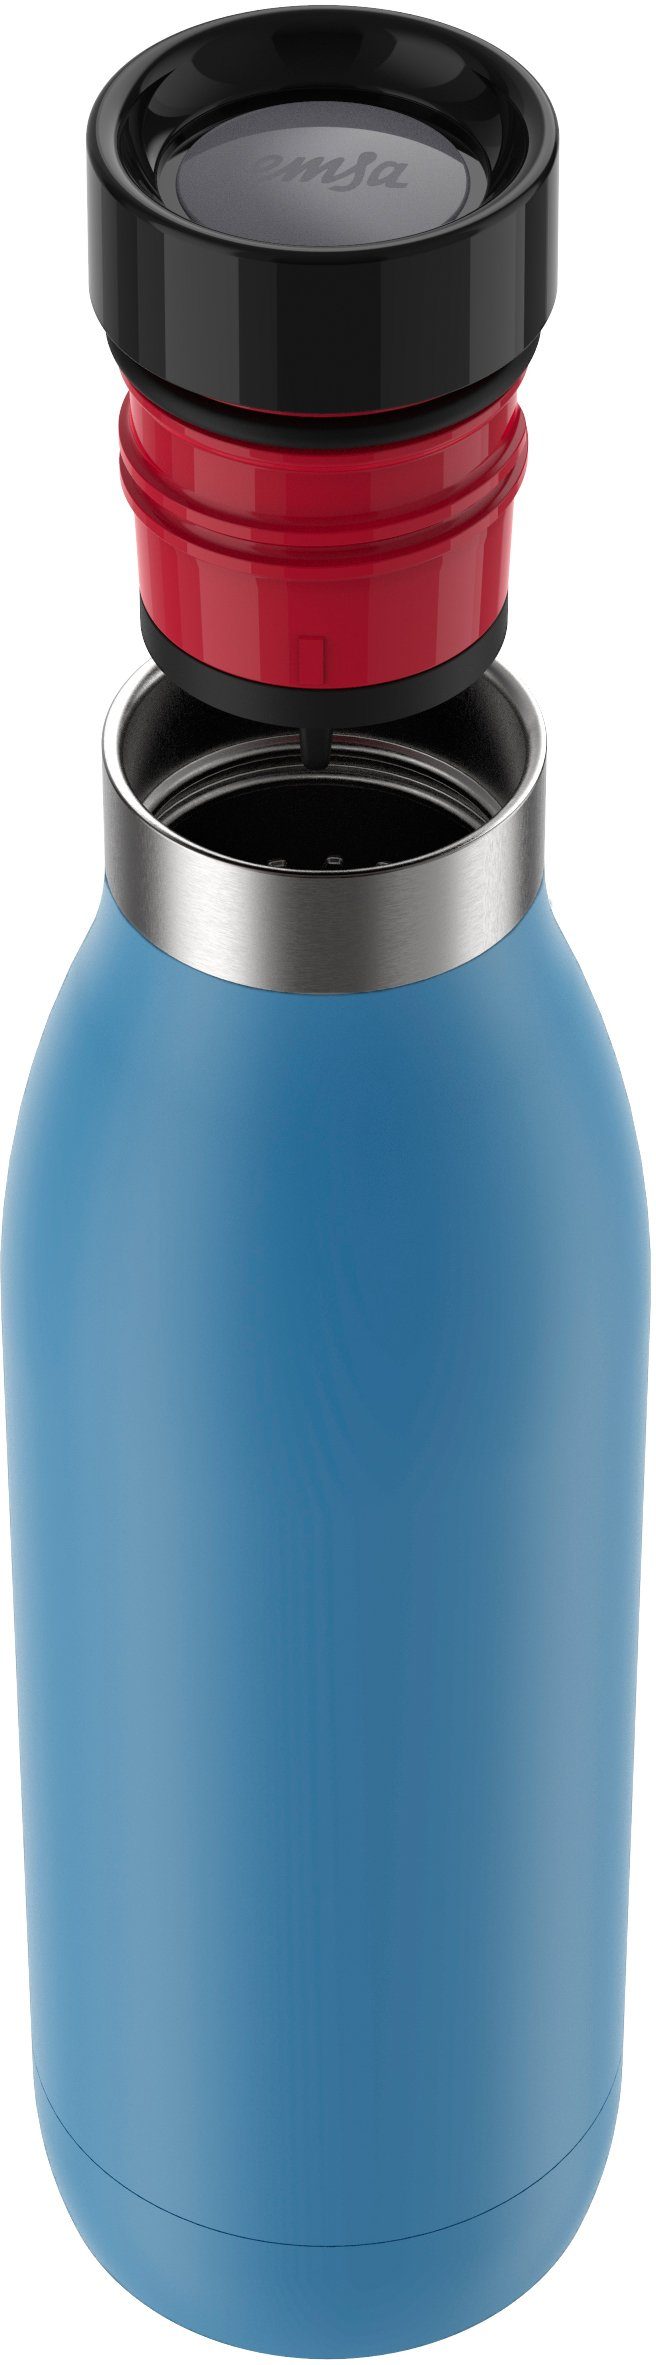 Edelstahl, Bludrop 12h Emsa Deckel, warm/24h kühl, spülmaschinenfest Trinkflasche Color, aquablau Quick-Press